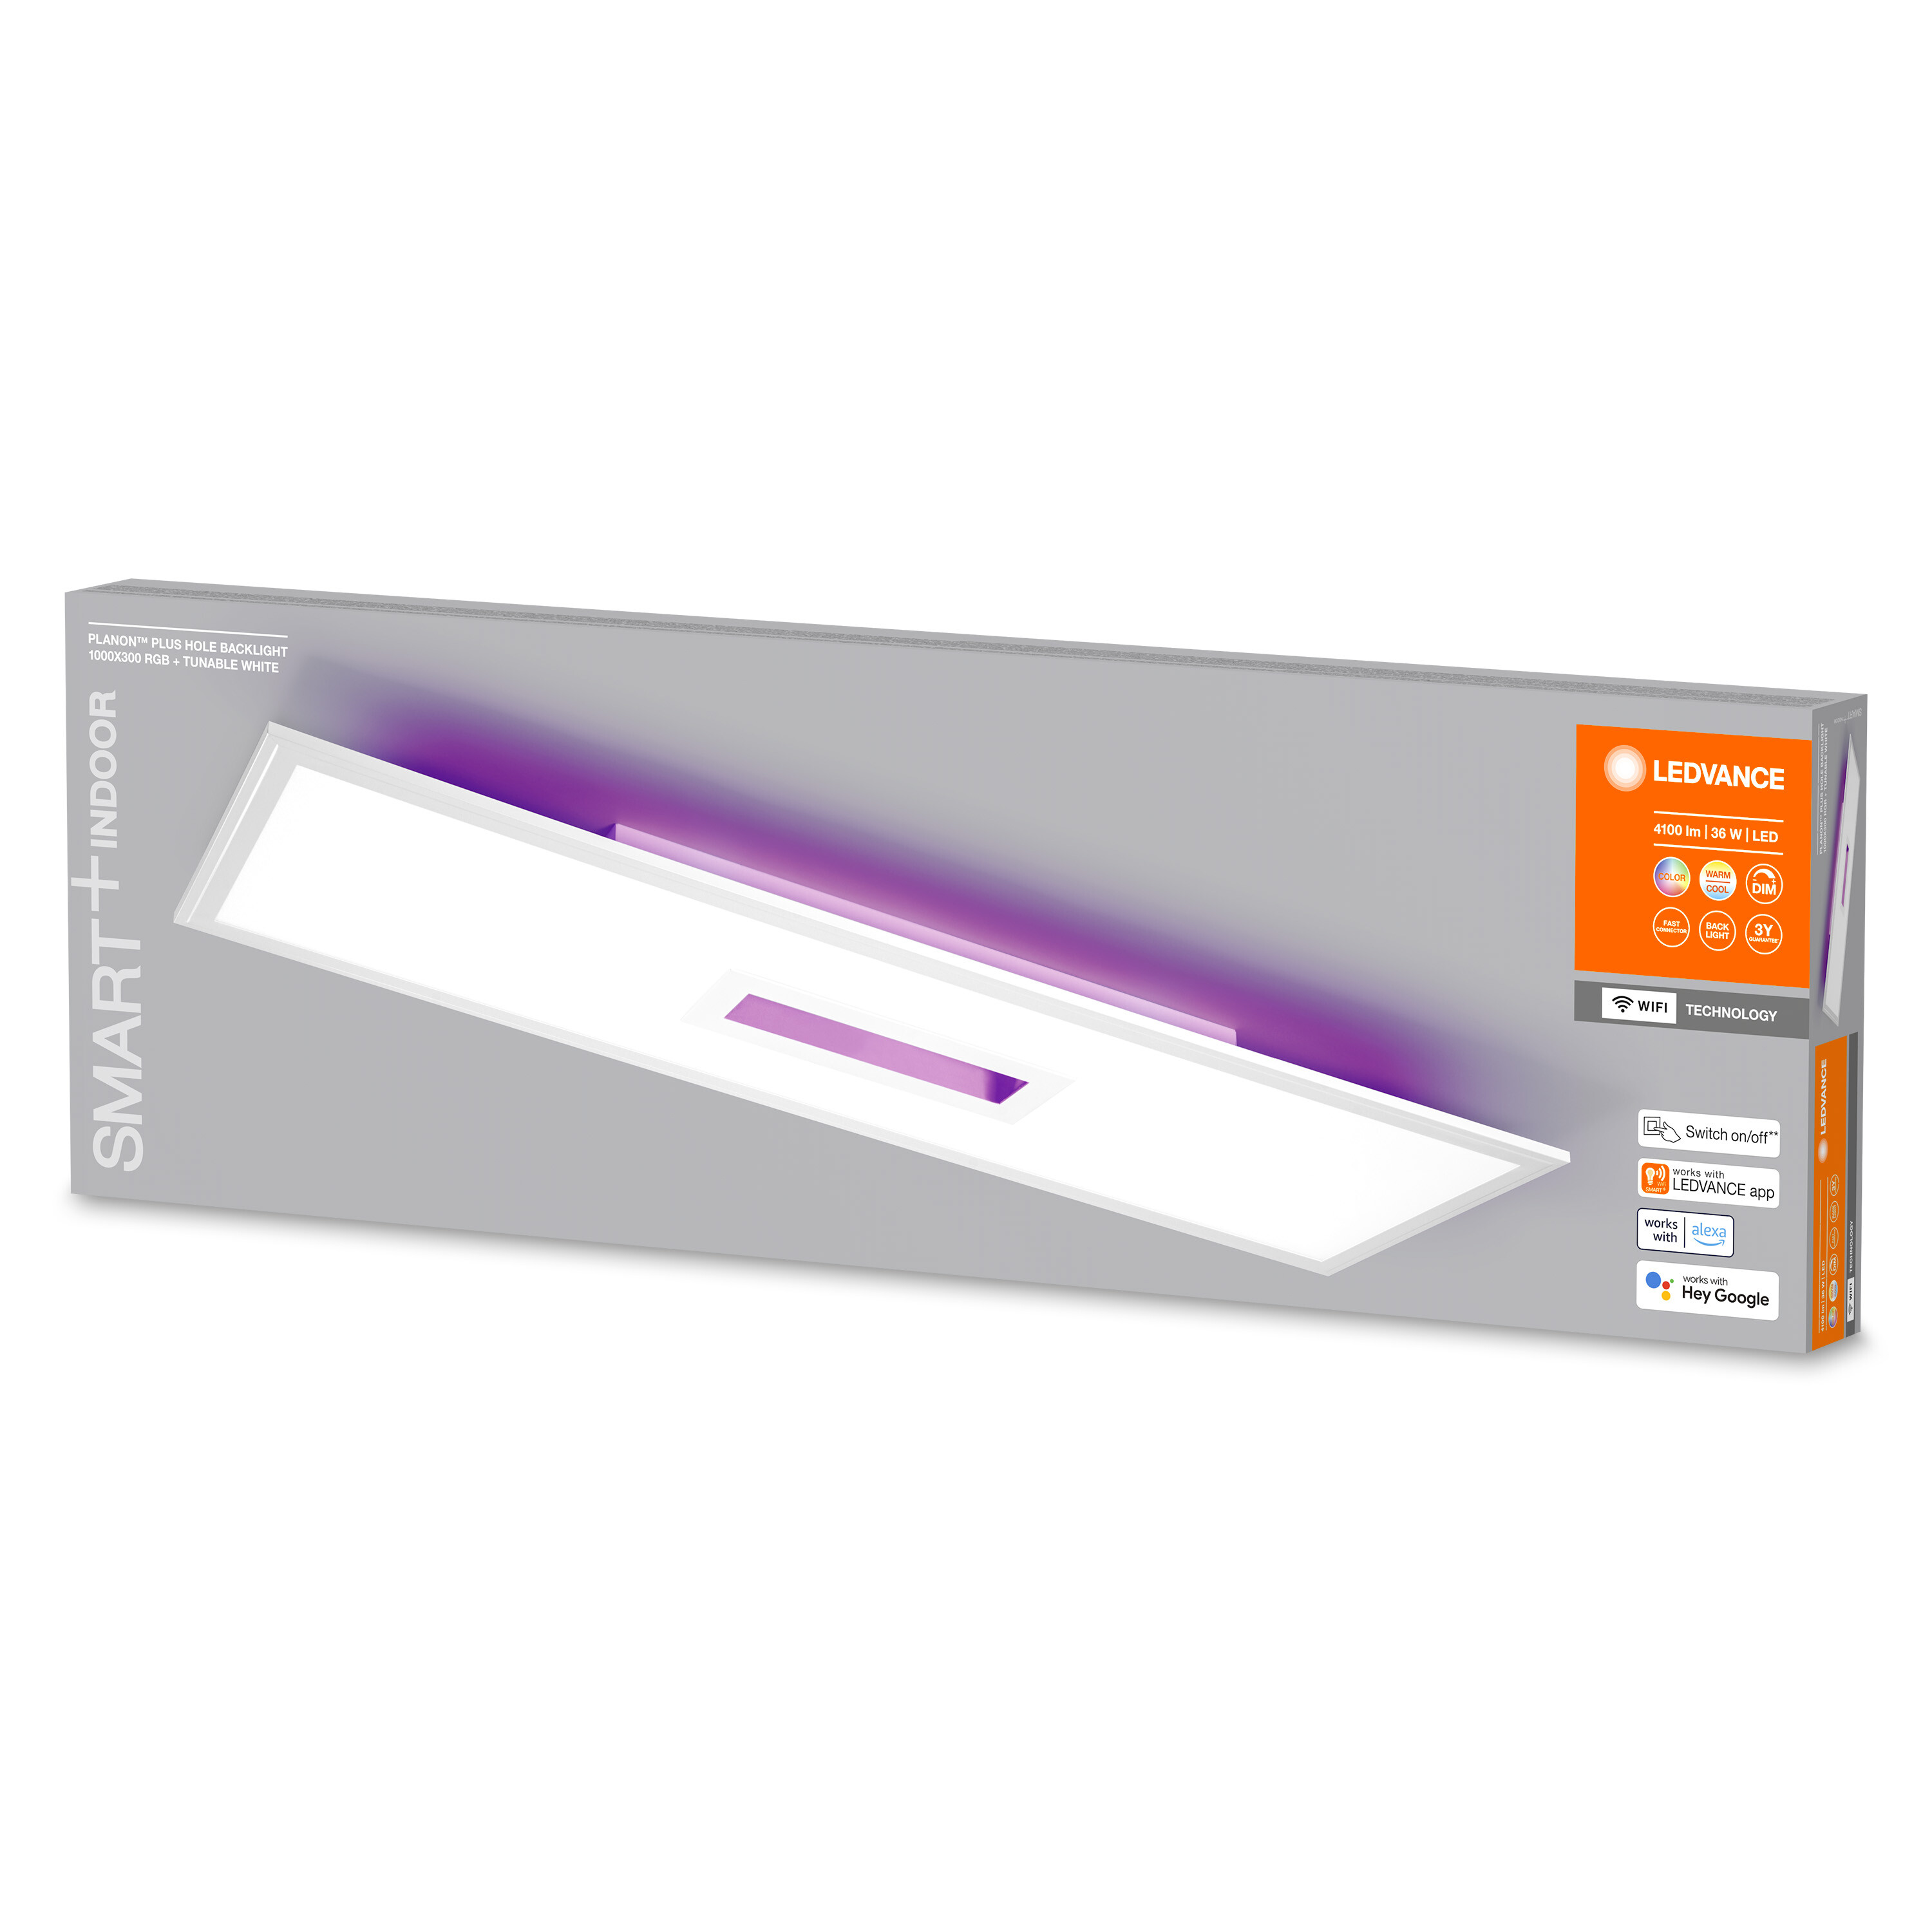 Smarte Backlight SMART+ with Tunable LEDVANCE technology White,RGB Planon Plus Leuchte WiFi